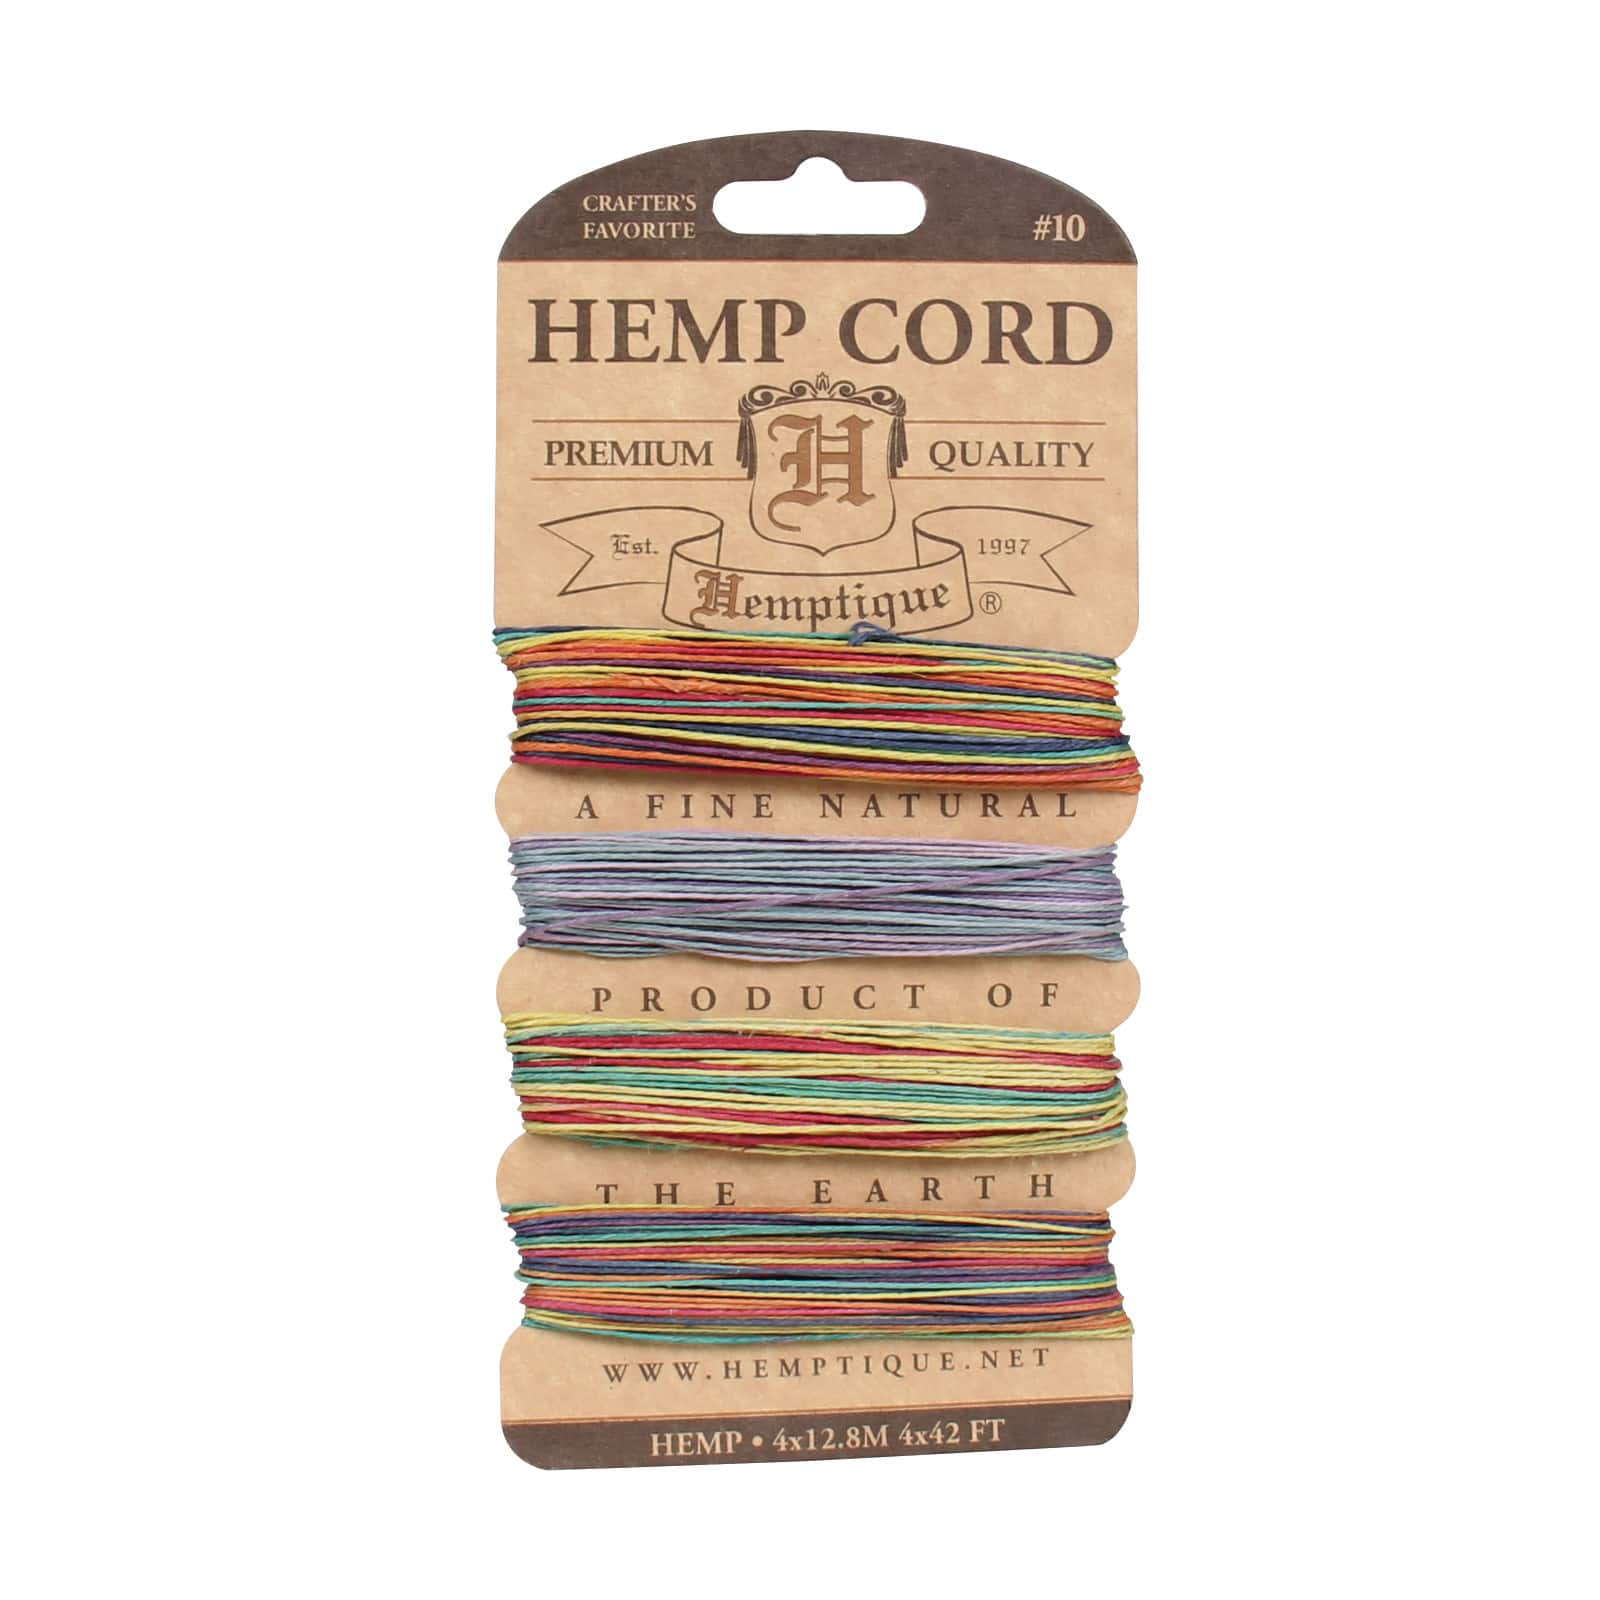 Hemptique Hemp Cord Sets